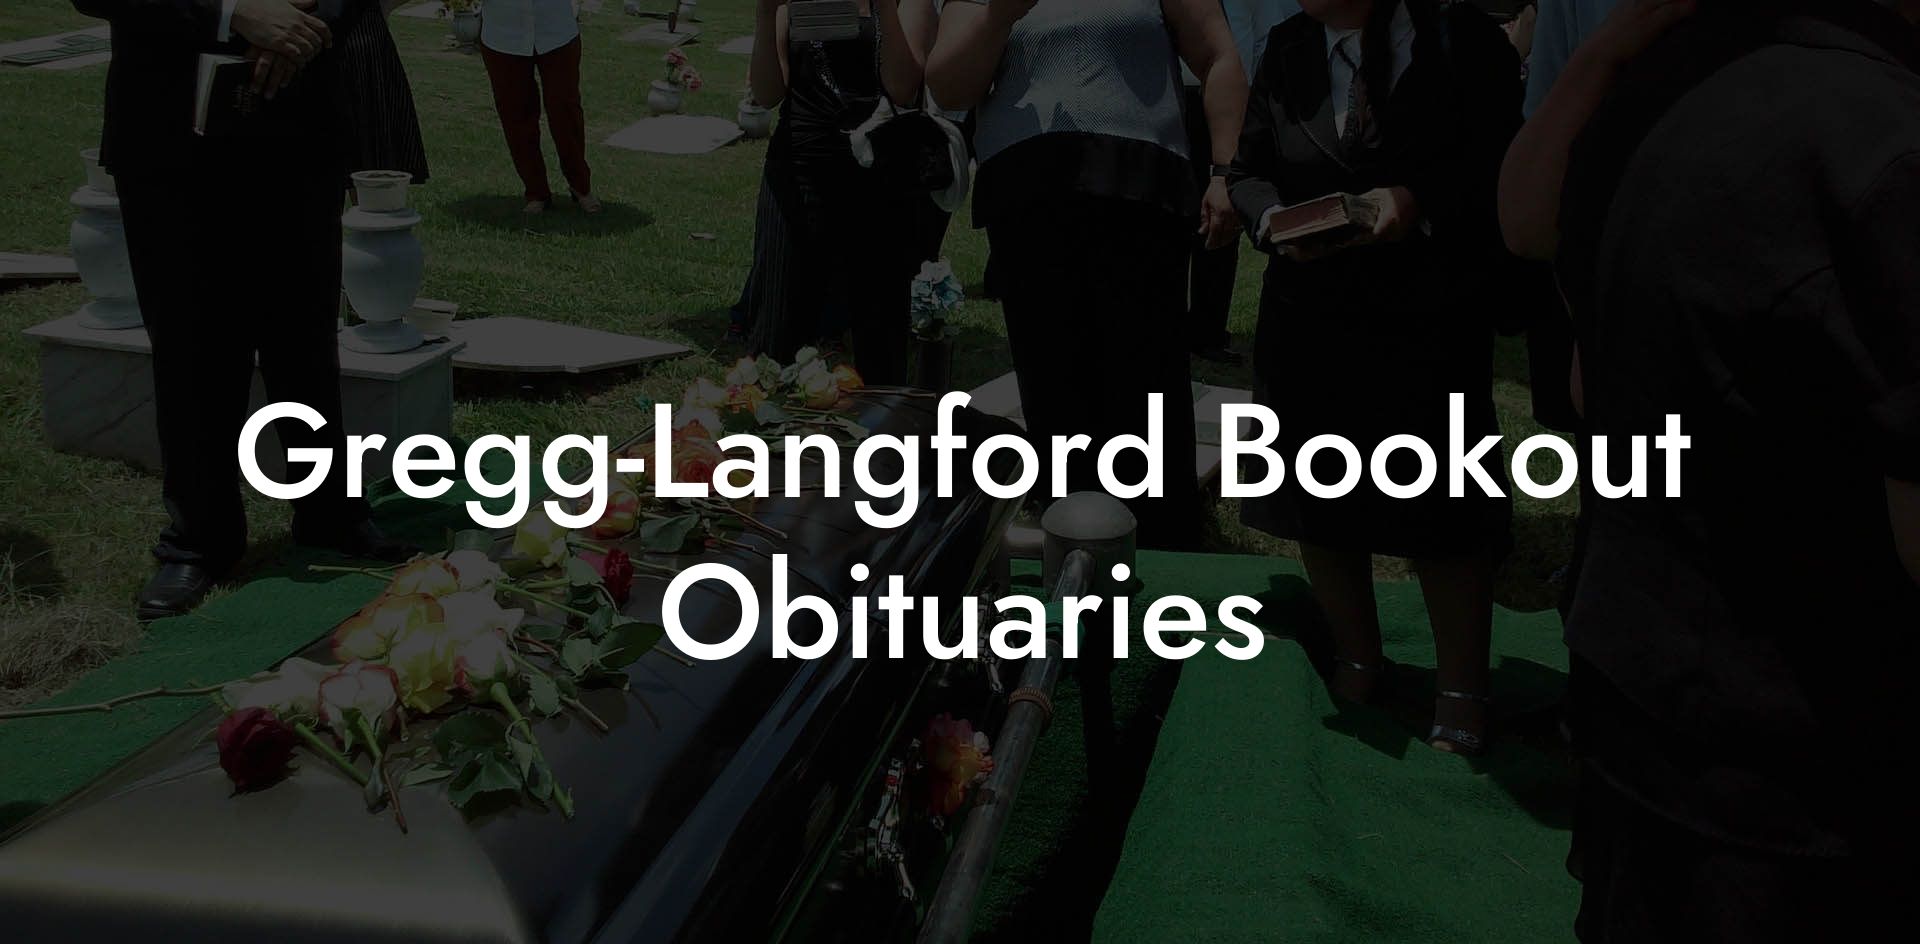 Gregg-Langford Bookout Obituaries